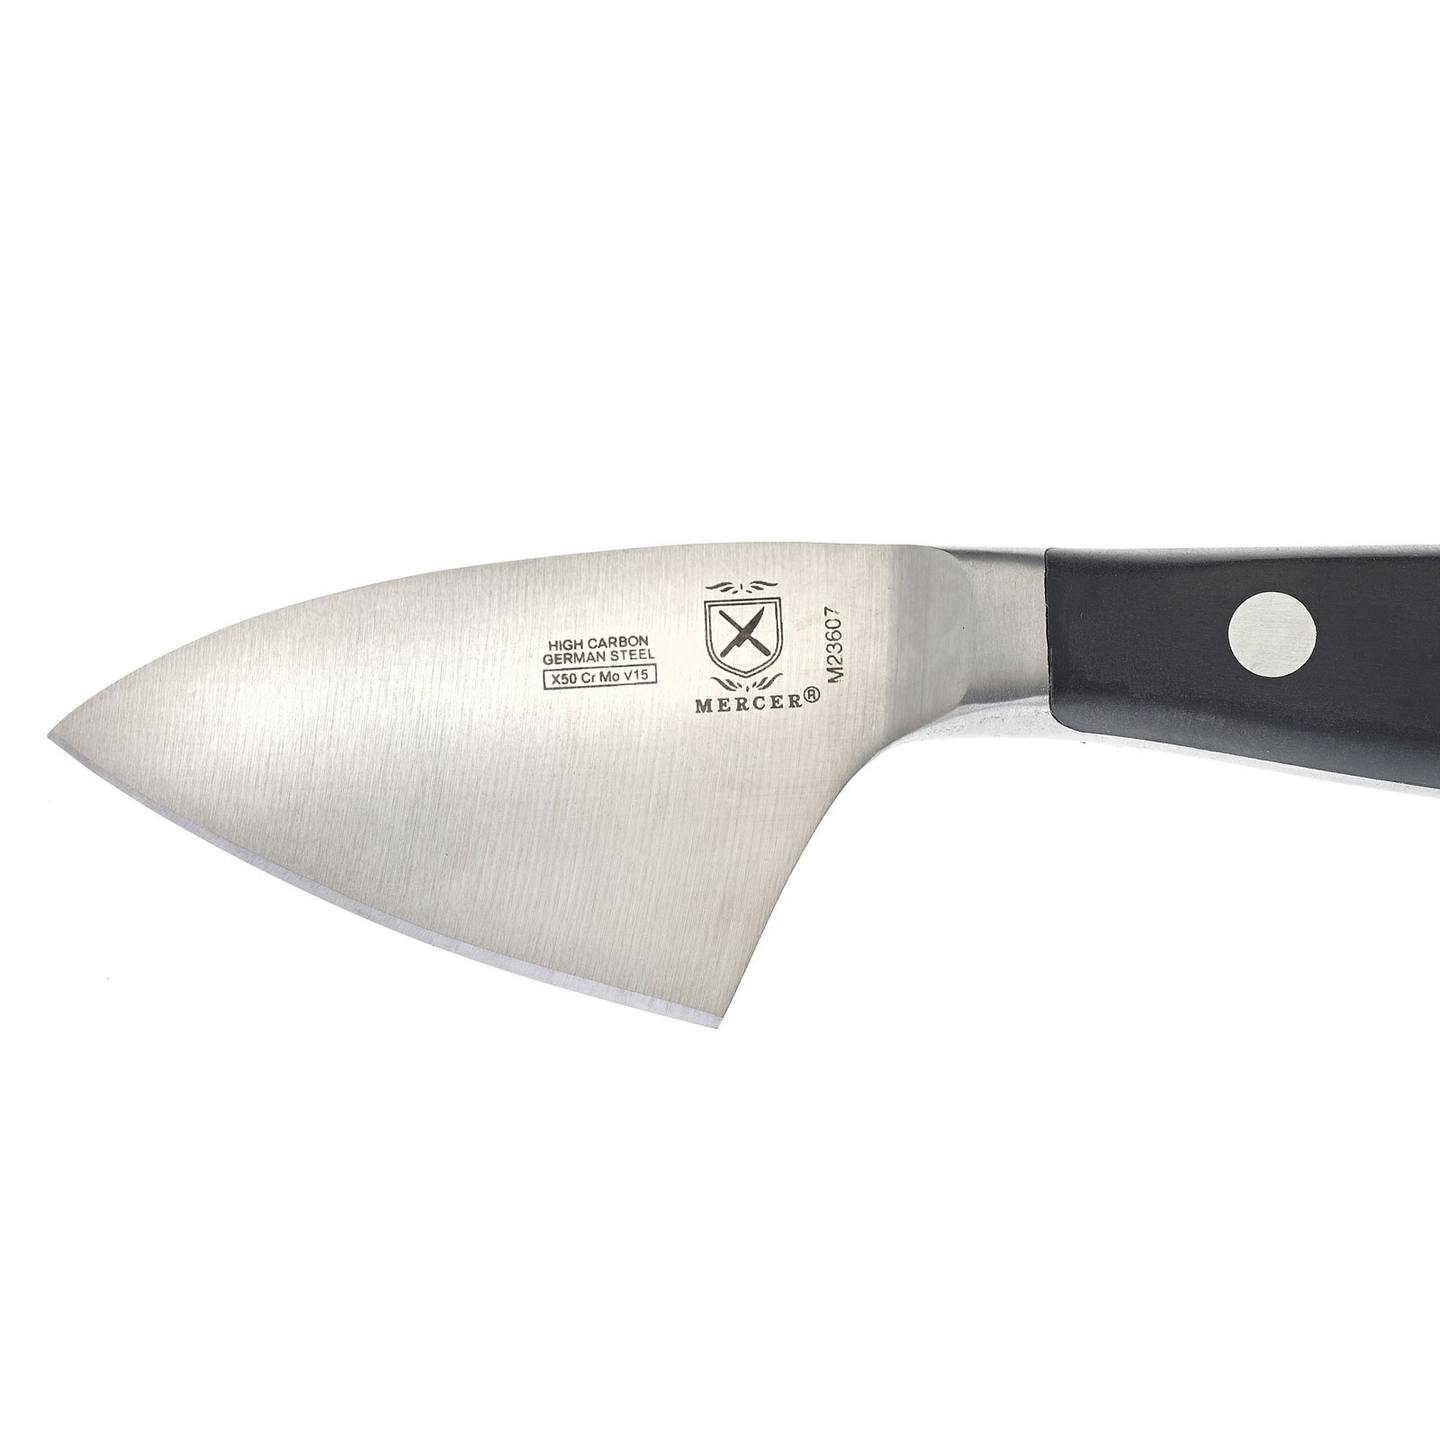 Mercer Culinary Renaissance 2 3/4" Parmesan Knife, POM Handle